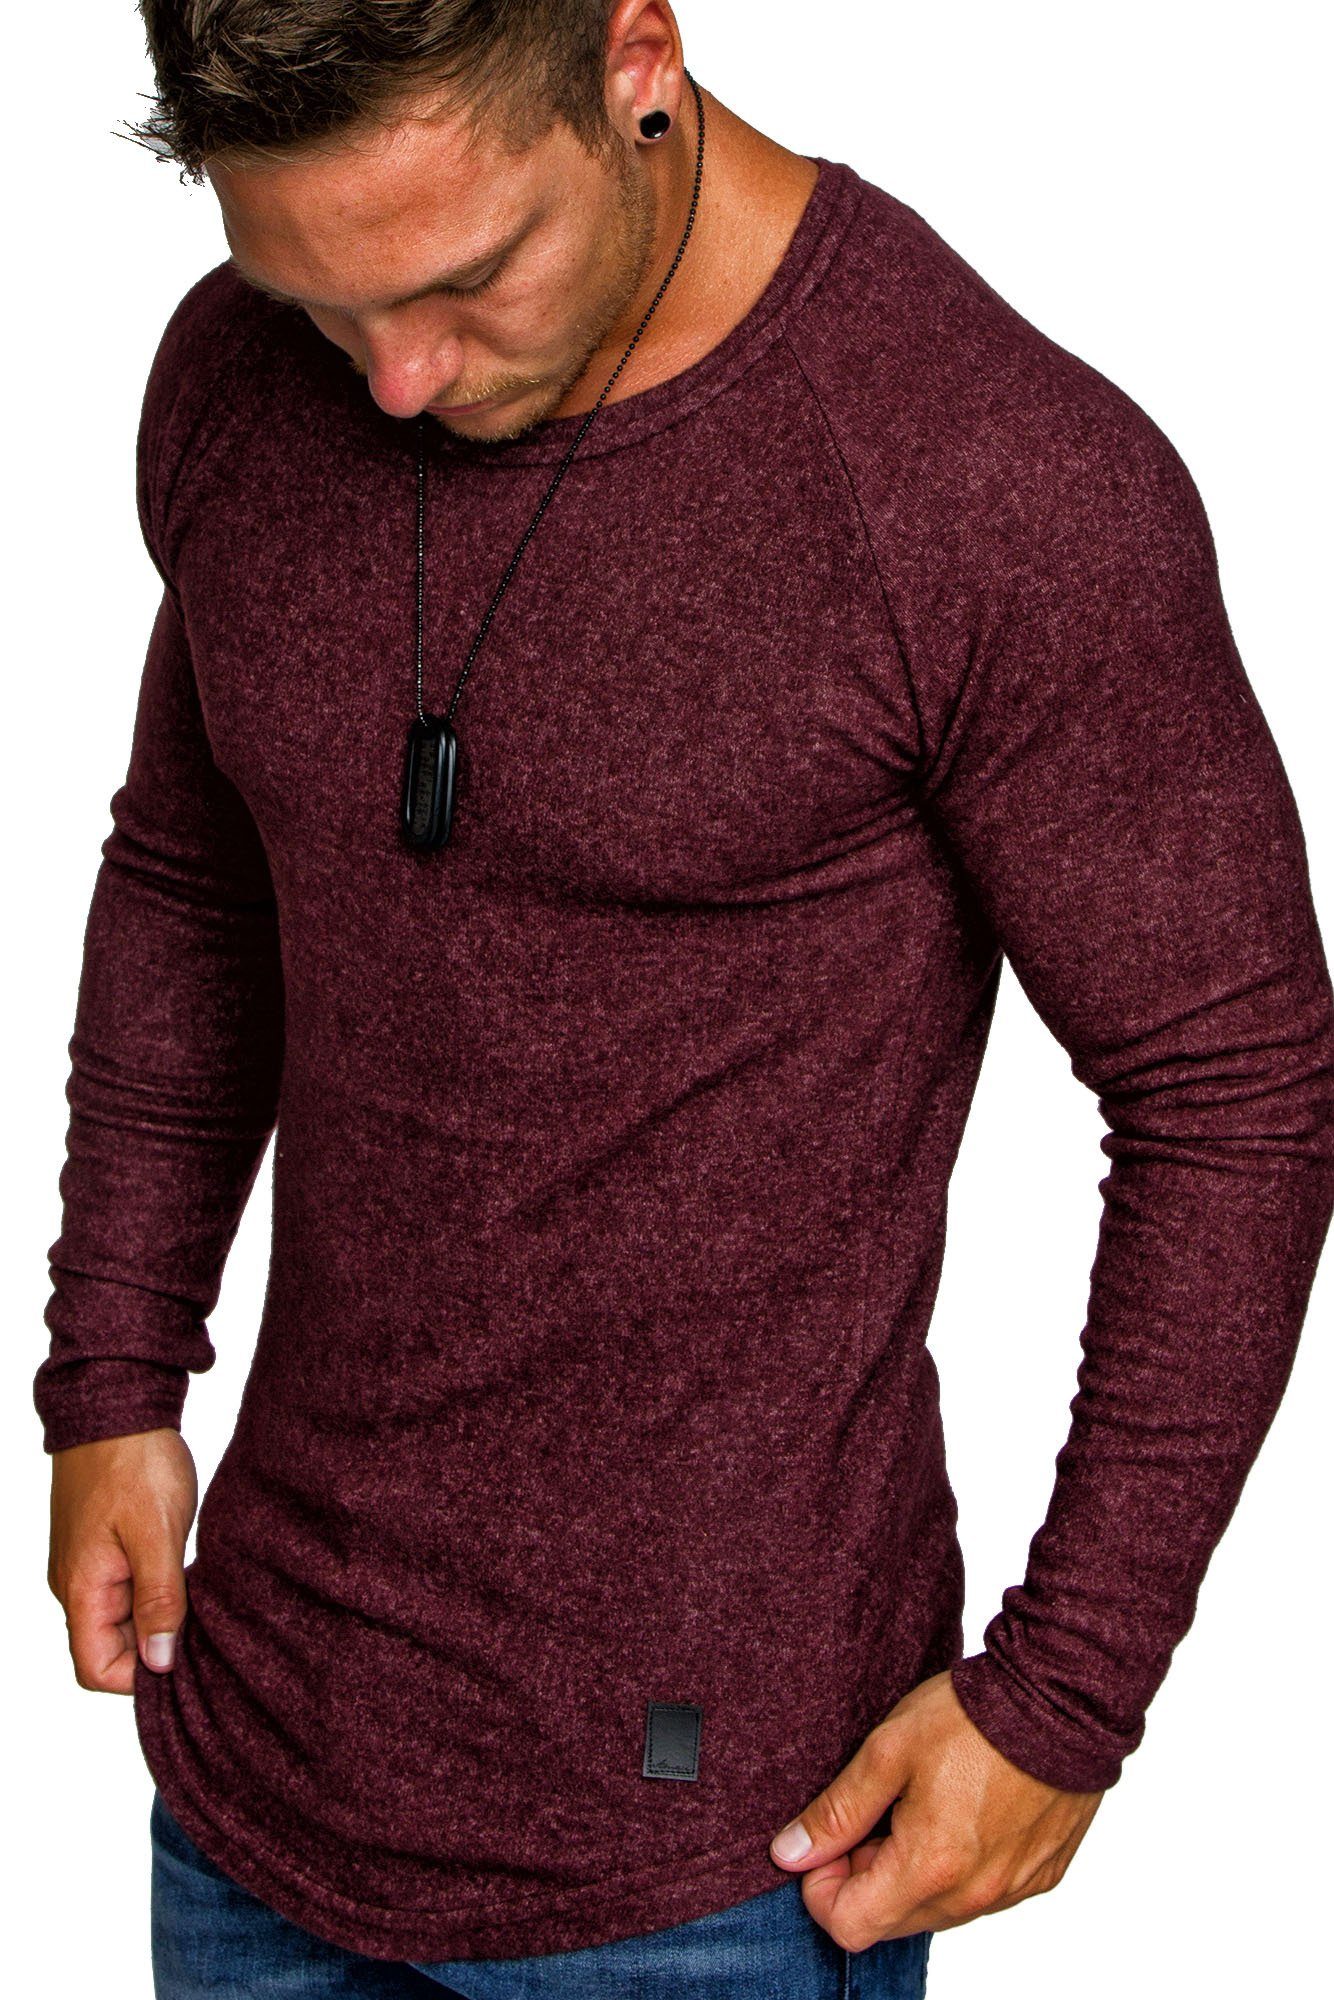 Amaci&Sons Sweatshirt TYLER Rundhals Oversize Bordeaux Herren Melange Pullover Hoodie Feinstrick Pullover mit Basic